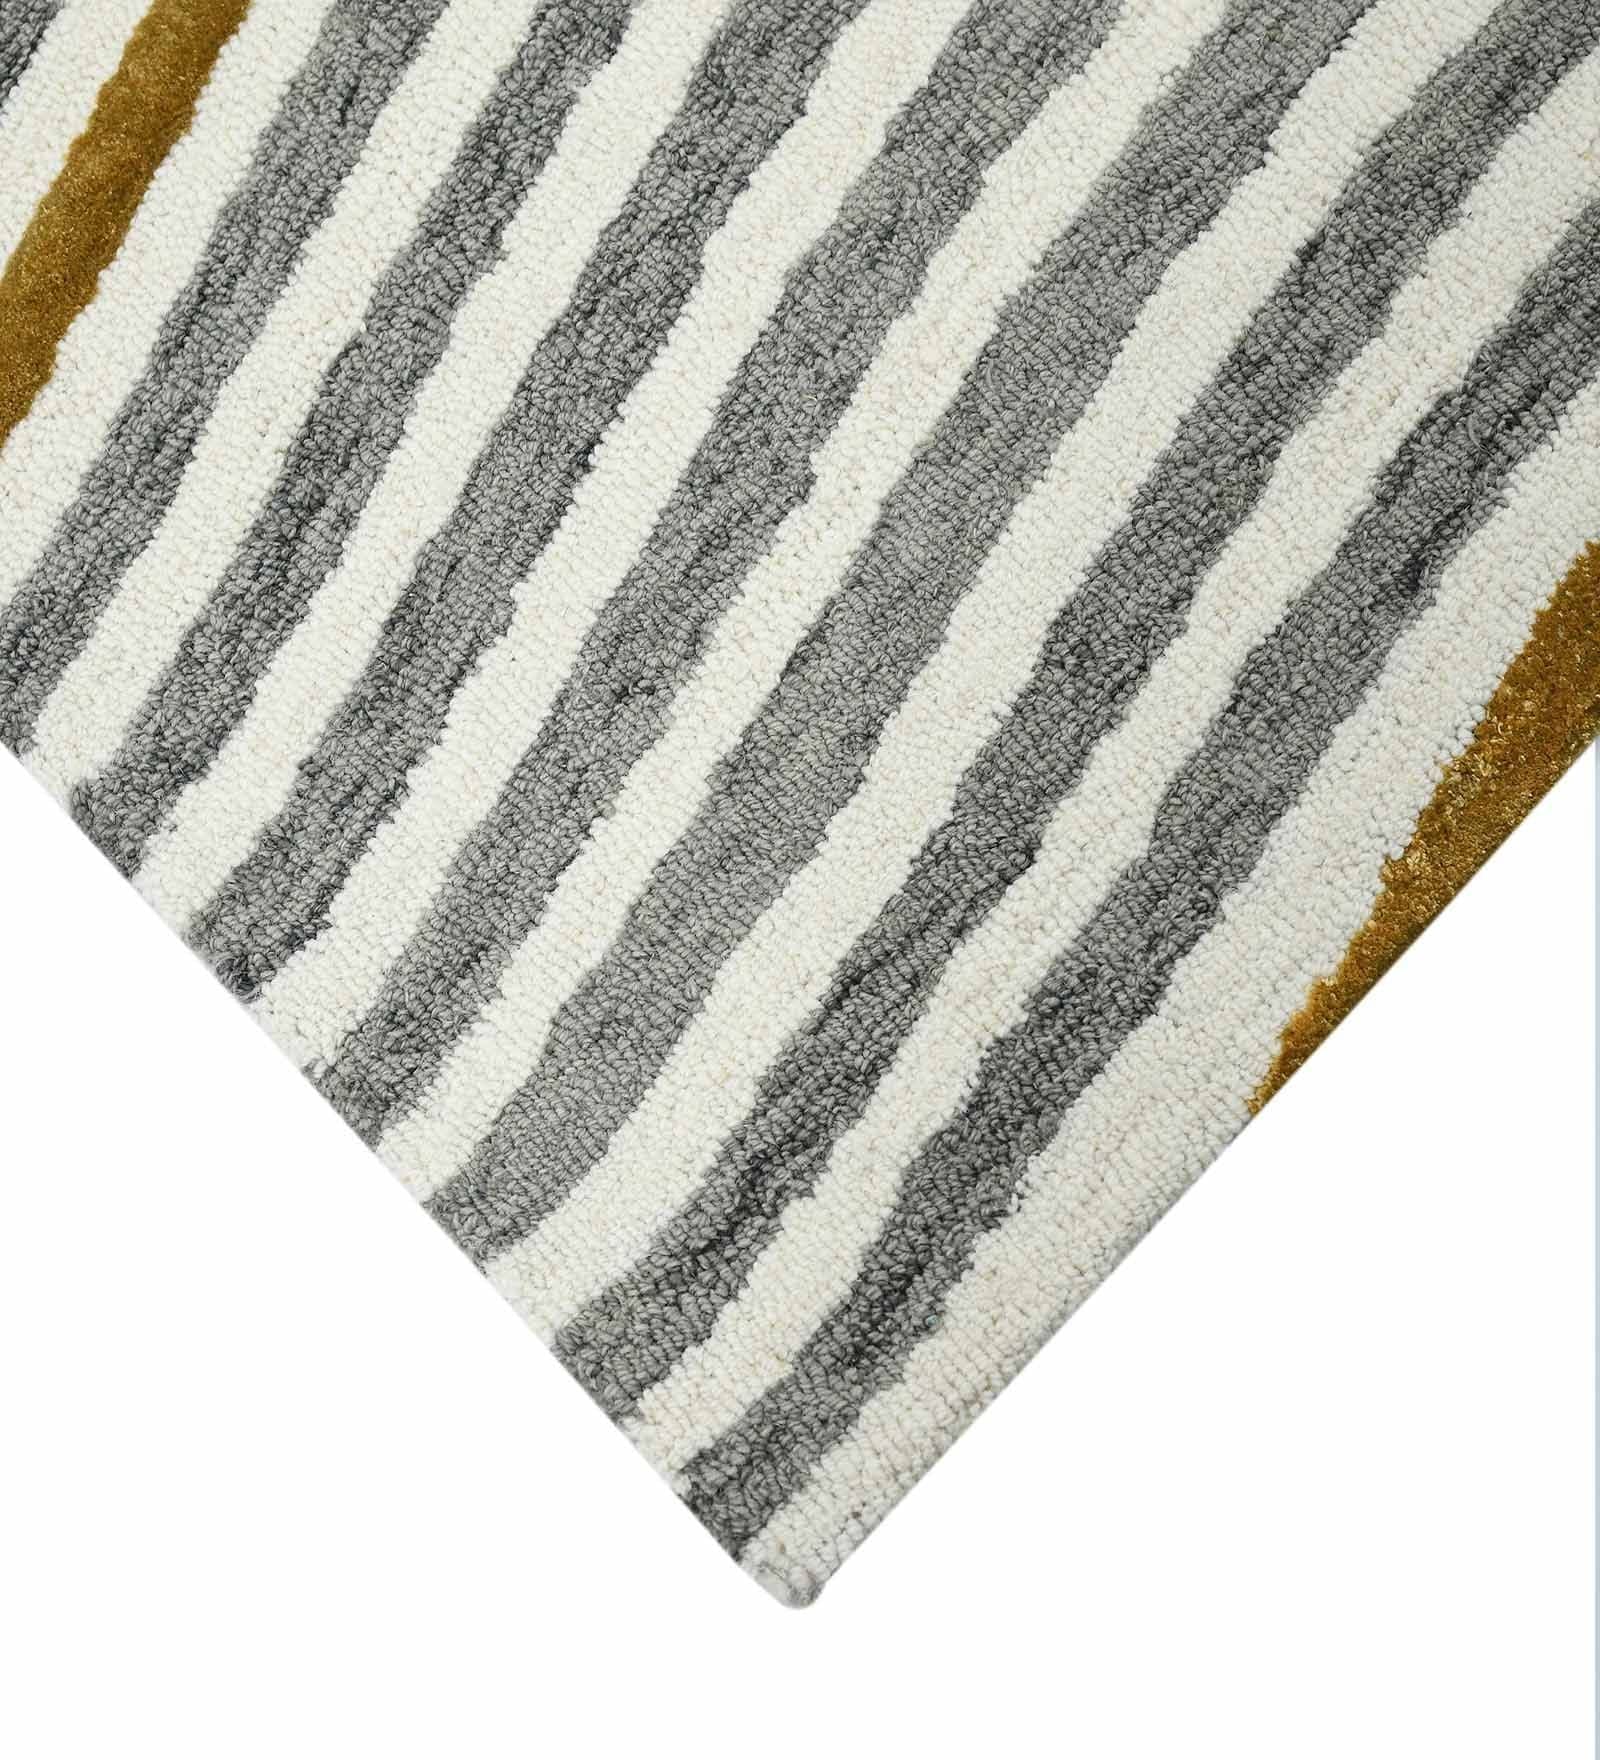 WHITE IVORY Wool & Viscose Canyan 8x10 Feet  Hand-Tufted Carpet - Rug